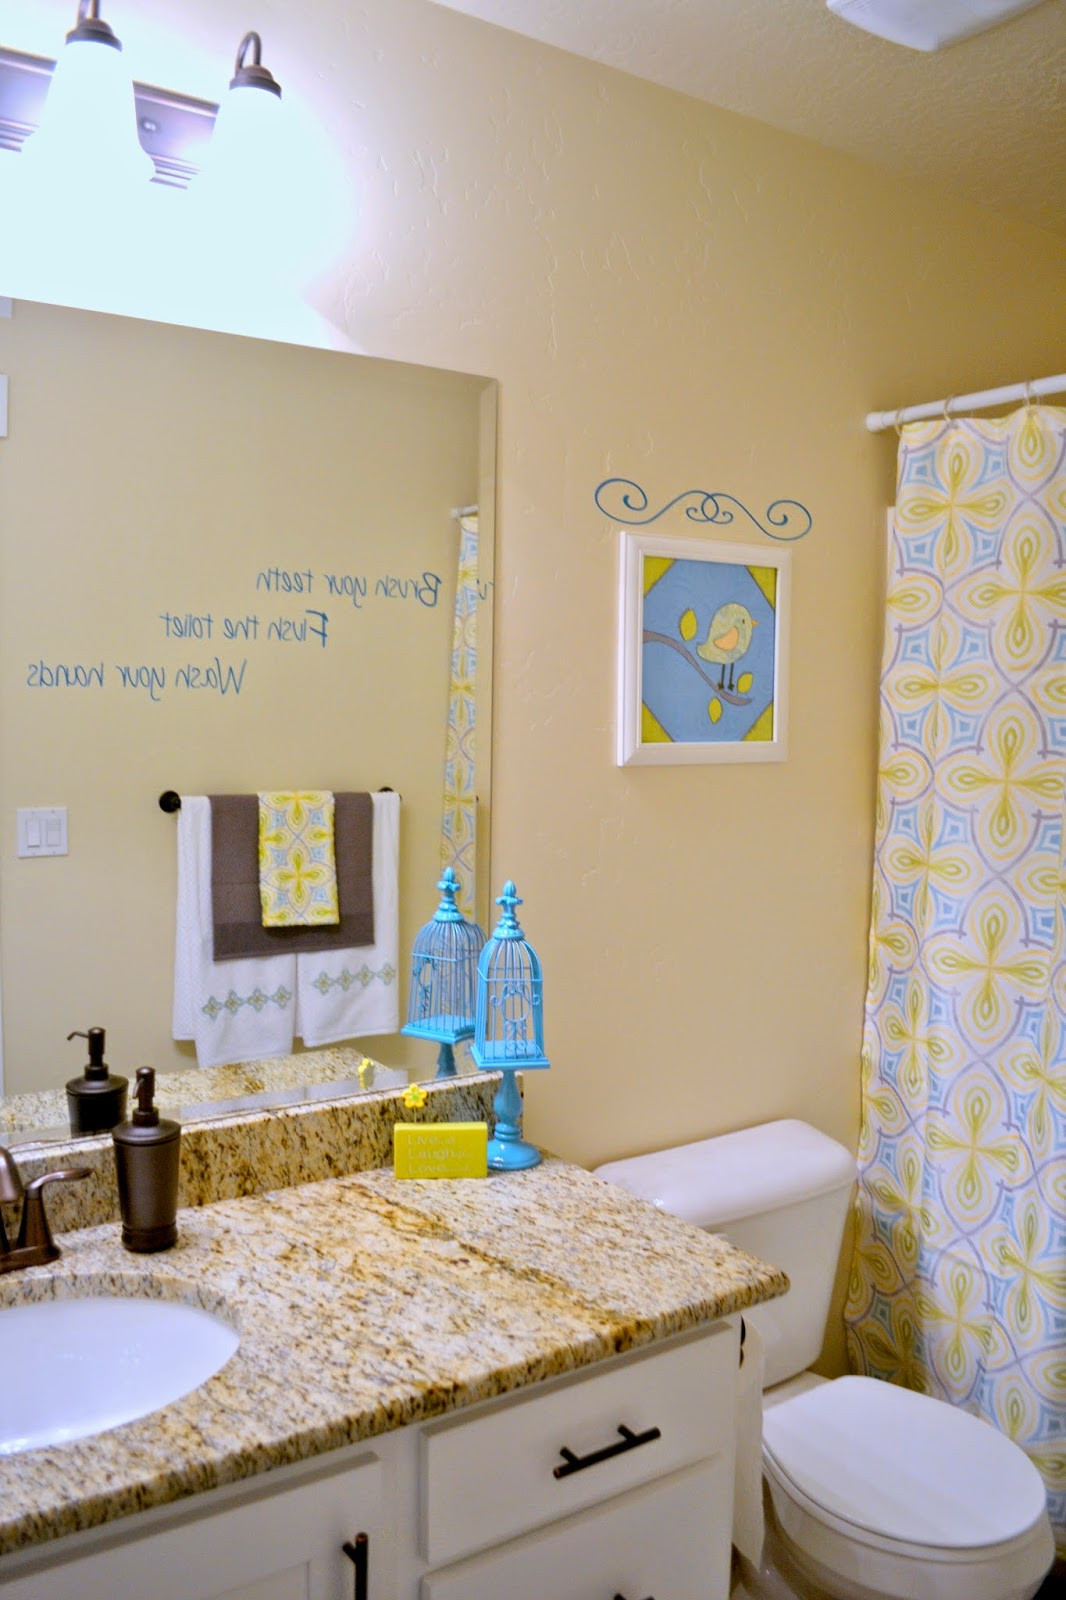 Best ideas about DIY Bathroom Decor
. Save or Pin Make It Scrappin DIY Bathroom Decor Now.